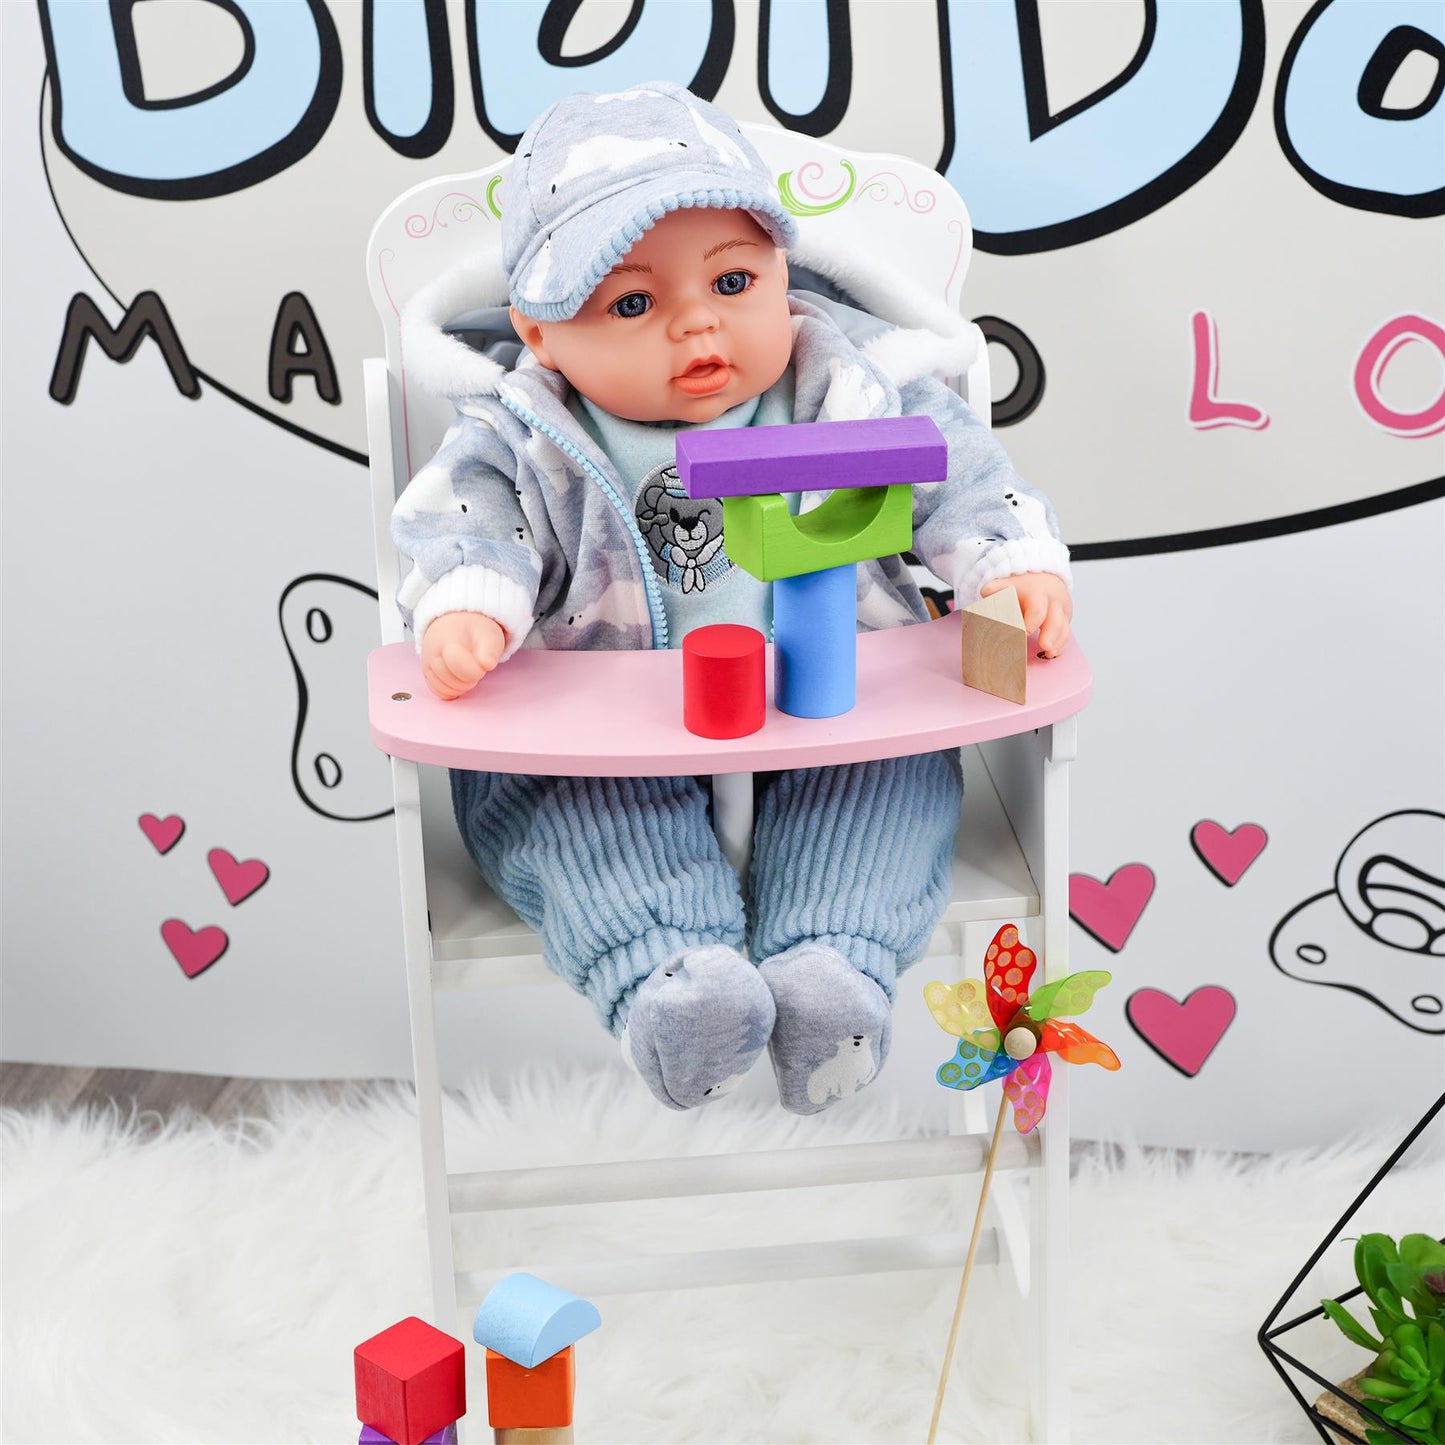 18" Soft Bodied Baby Doll Boys Toy by BiBi Doll - UKBuyZone